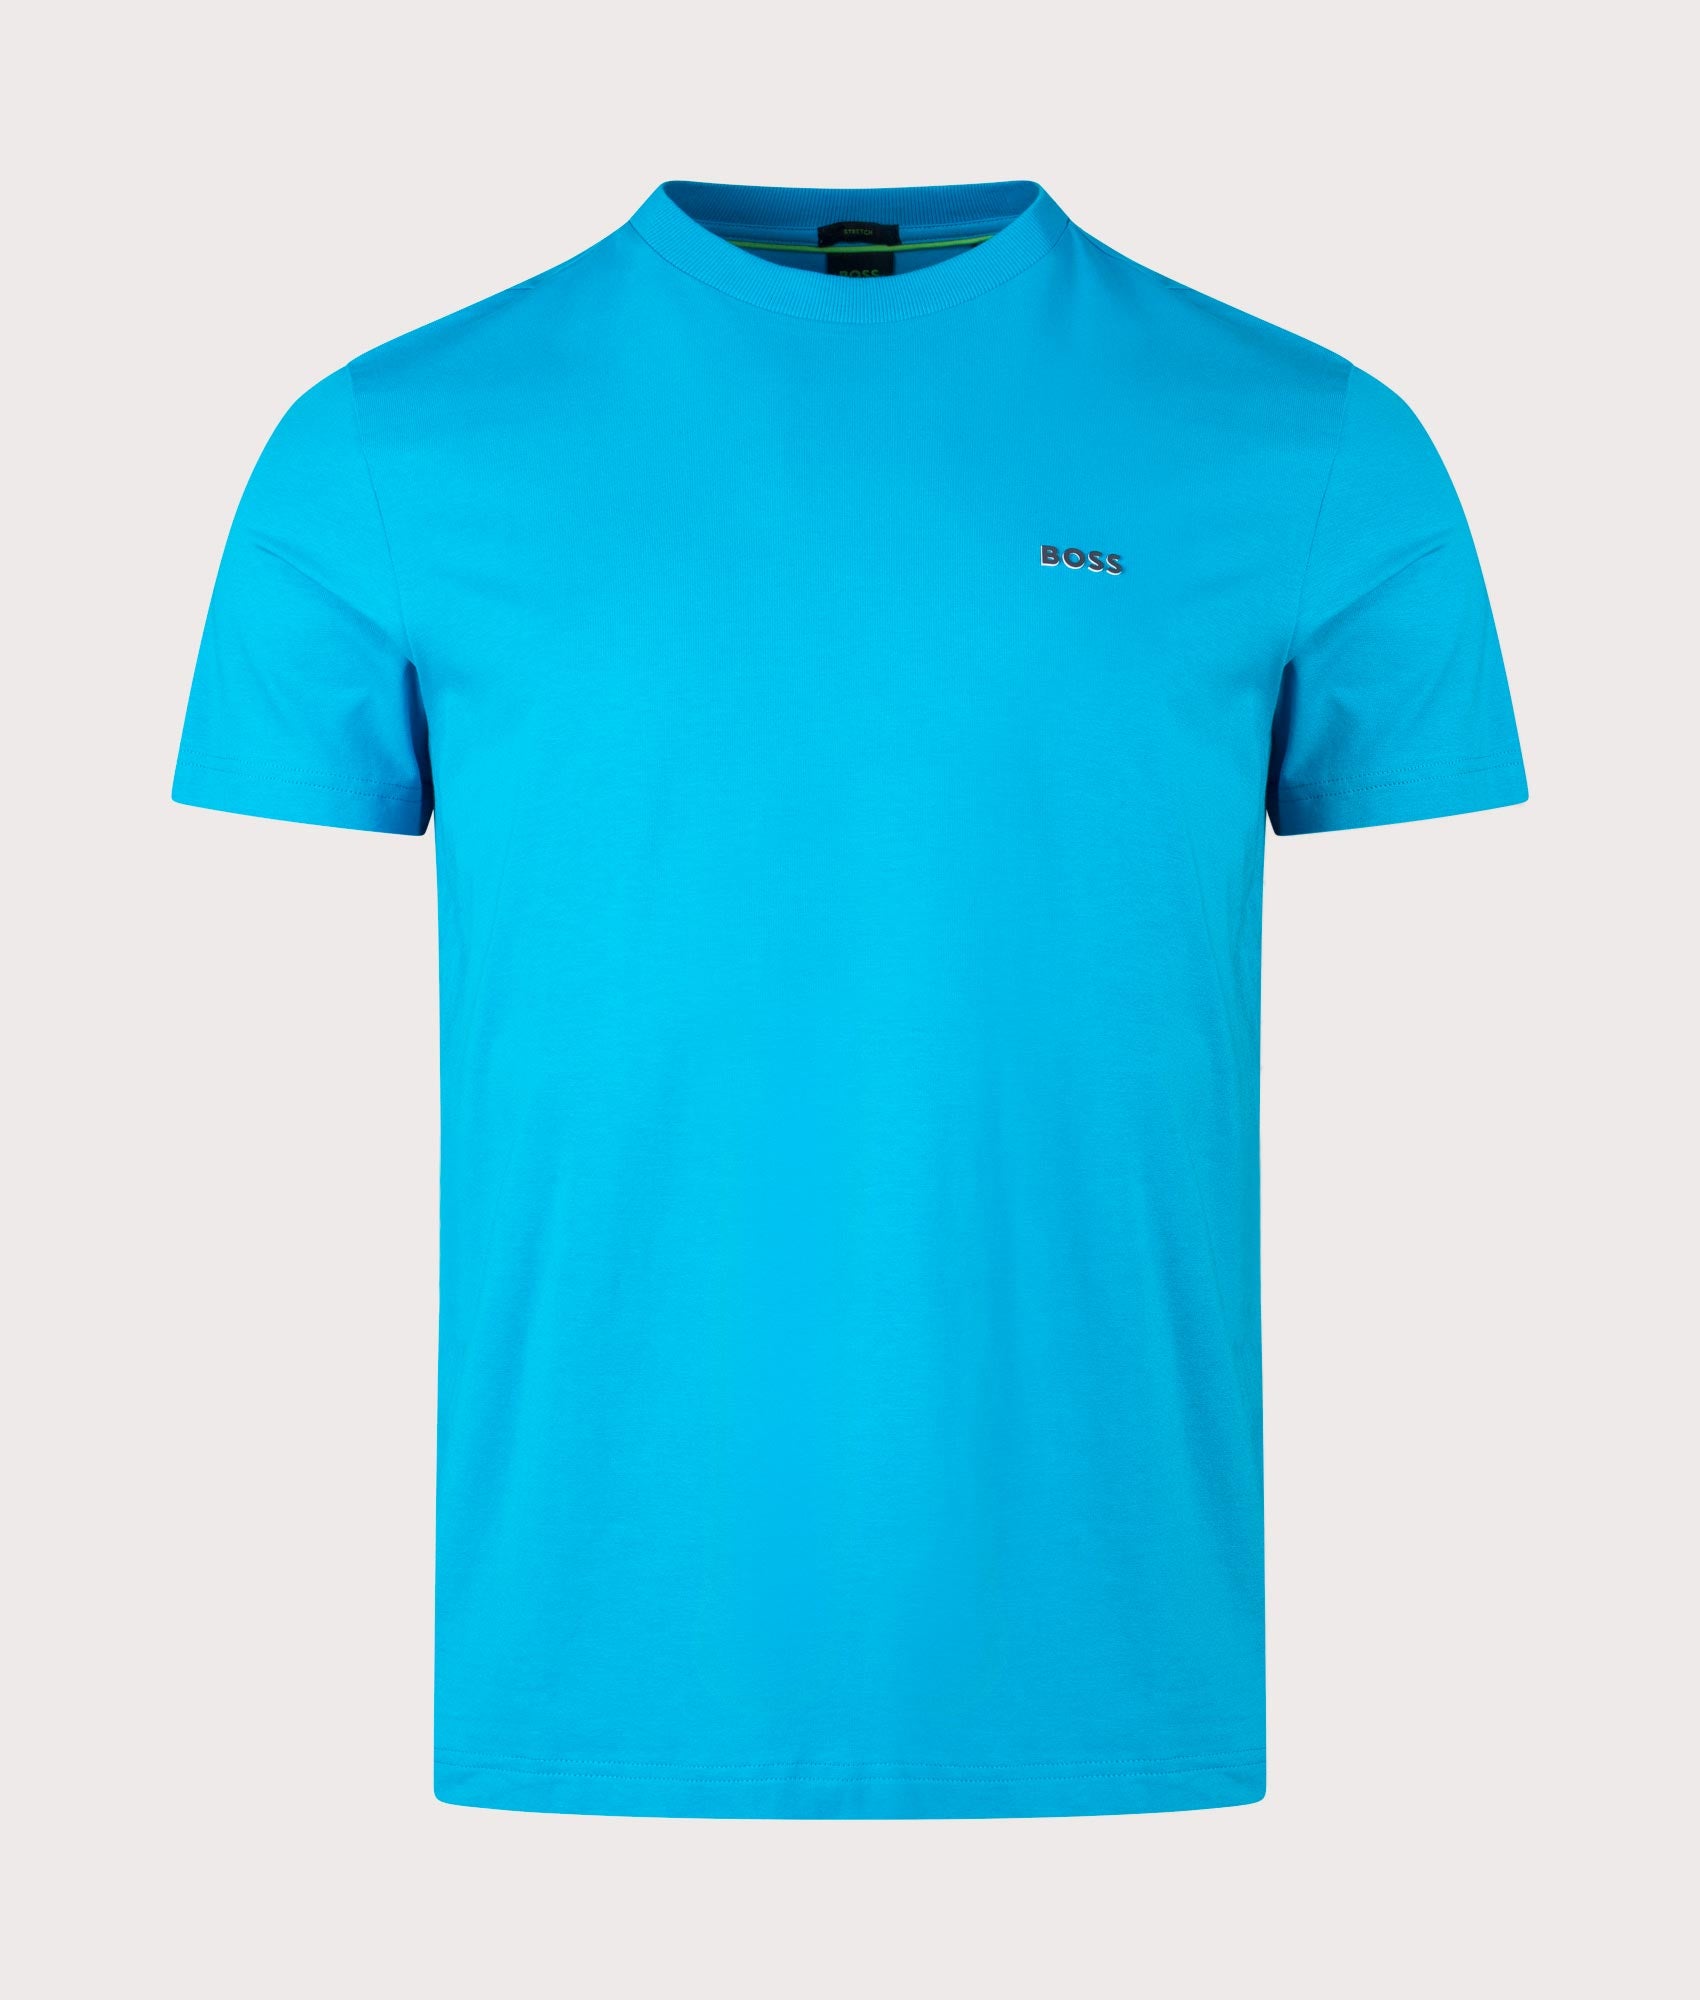 BOSS Mens Crew Neck Tee T-Shirt - Colour: 442 Turquoise/Aqua - Size: Medium